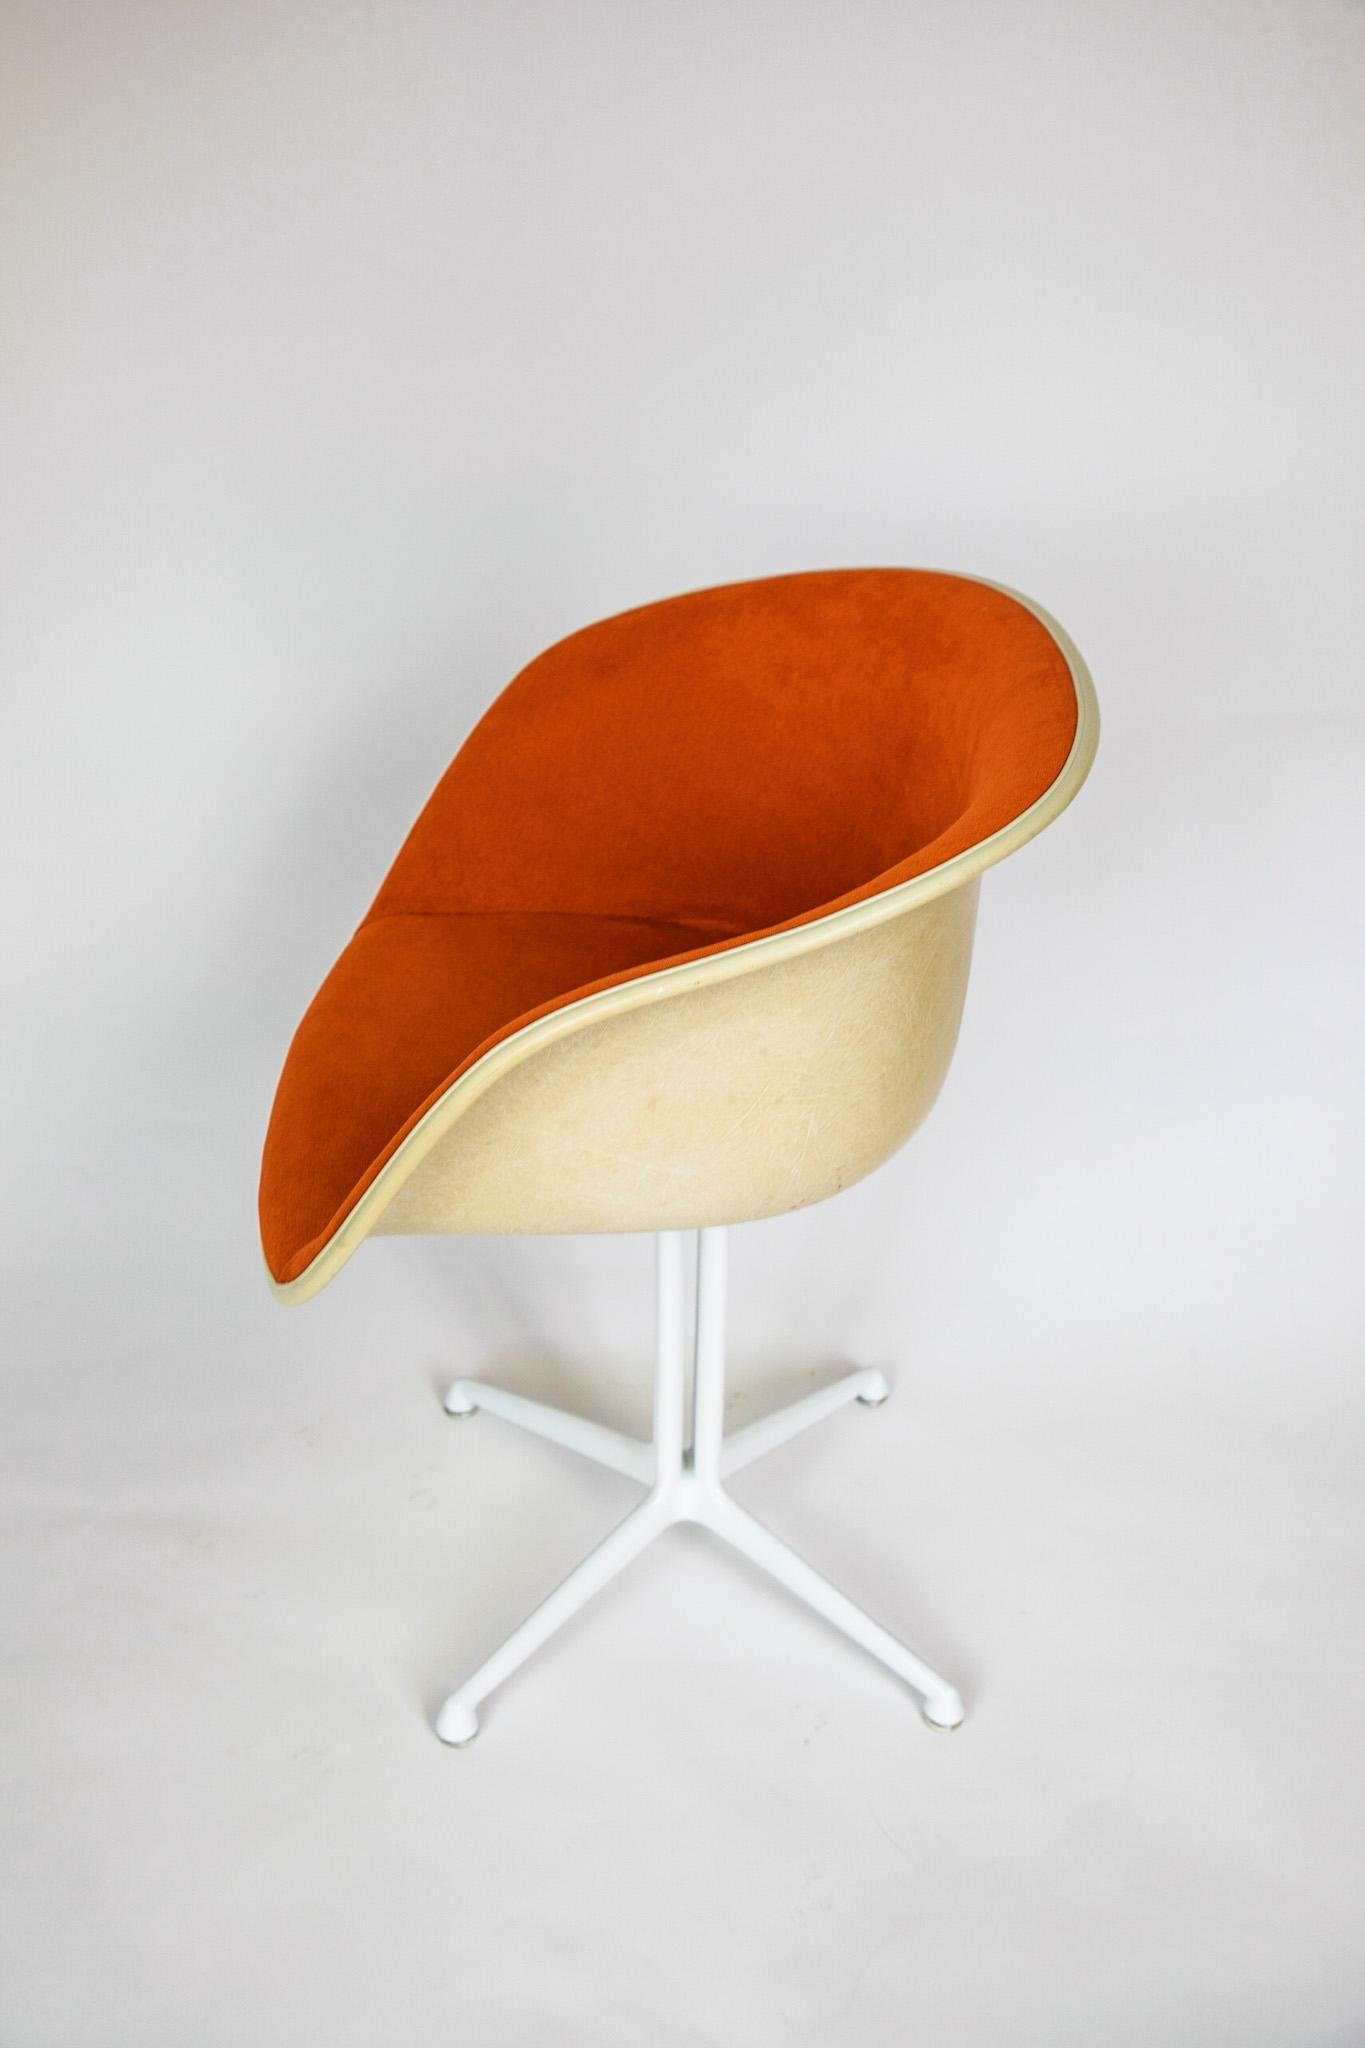 Swiss Mid-Century Modern Fibreglass Dining Chair La Fonda by Eames for Vitra, 1960s